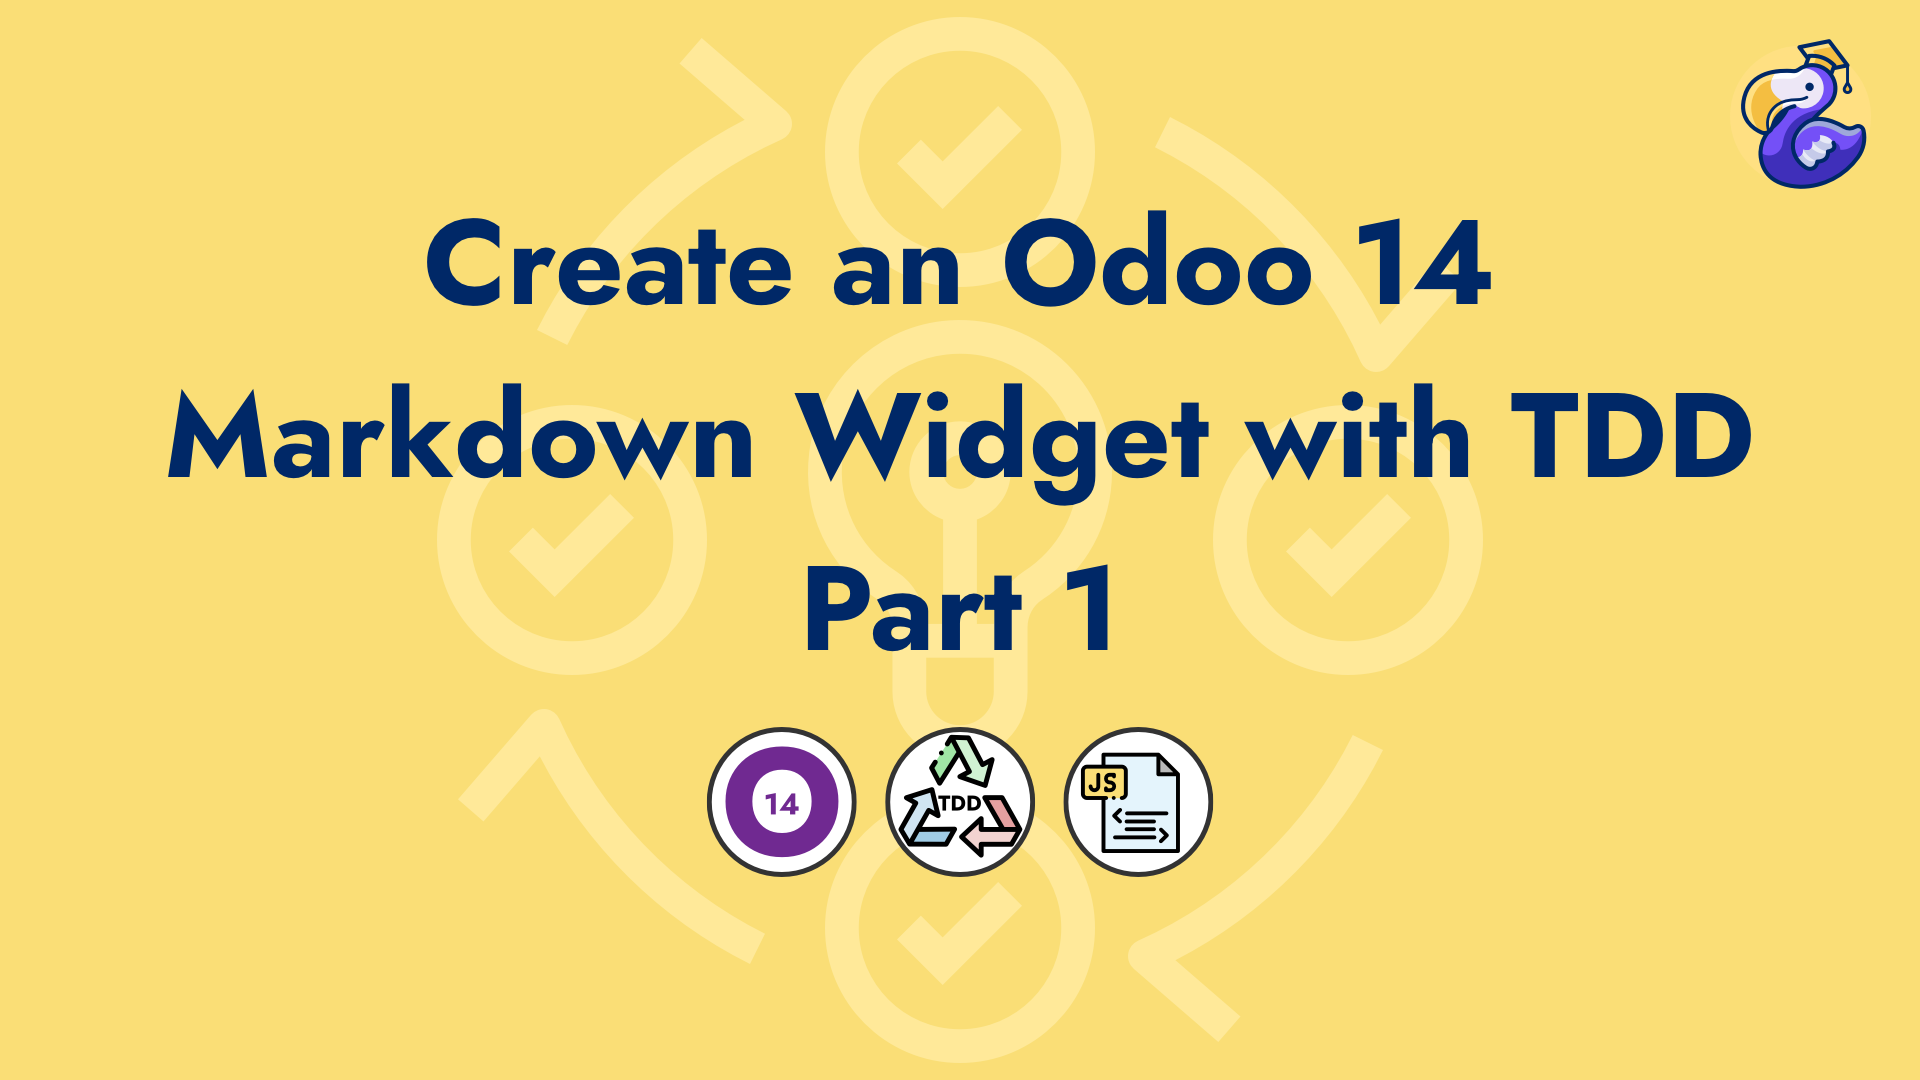 Create an Odoo 14 Markdown Widget Field with TDD - Part 2